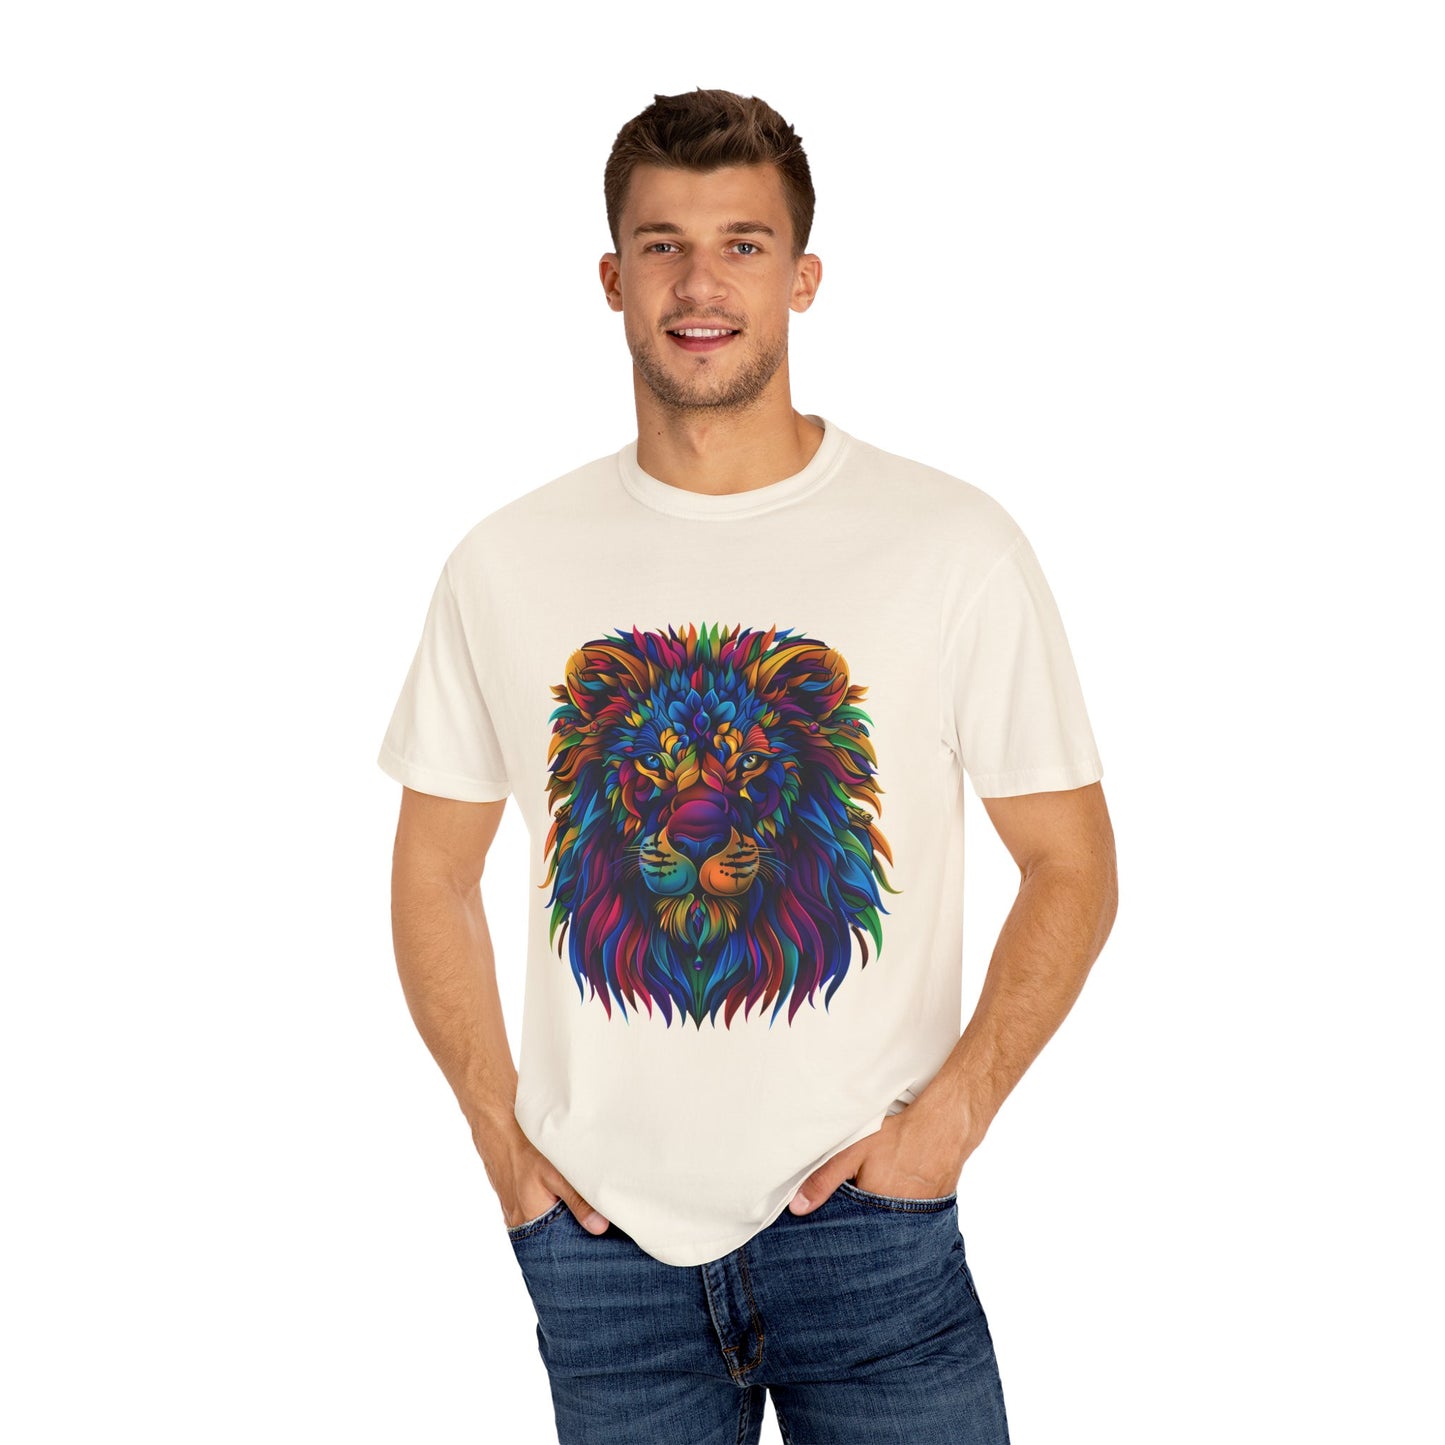 Lion Head Cool Graphic Design Novelty Unisex Garment-dyed T-shirt Cotton Funny Humorous Graphic Soft Premium Unisex Men Women Ivory T-shirt Birthday Gift-45